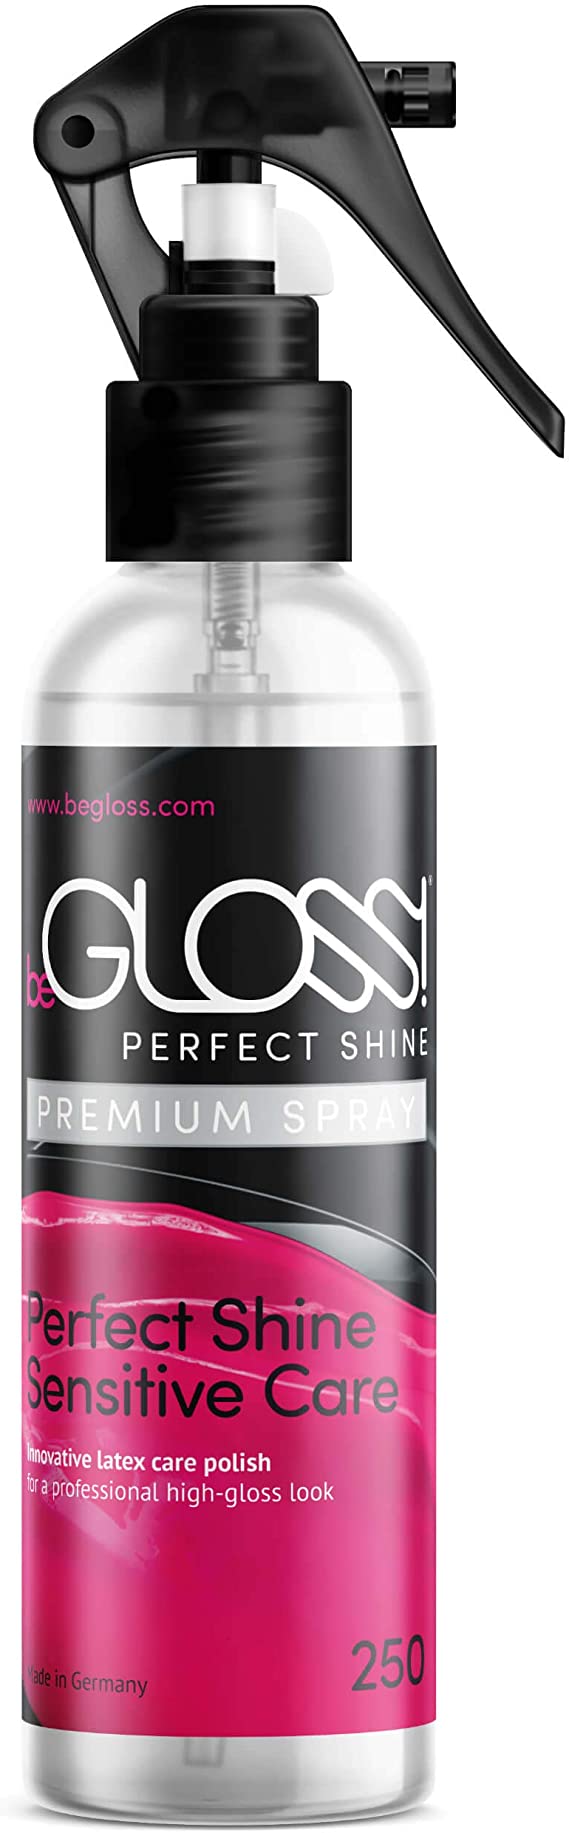 beGLOSS Perfect Shine, 250ml spray bottle.